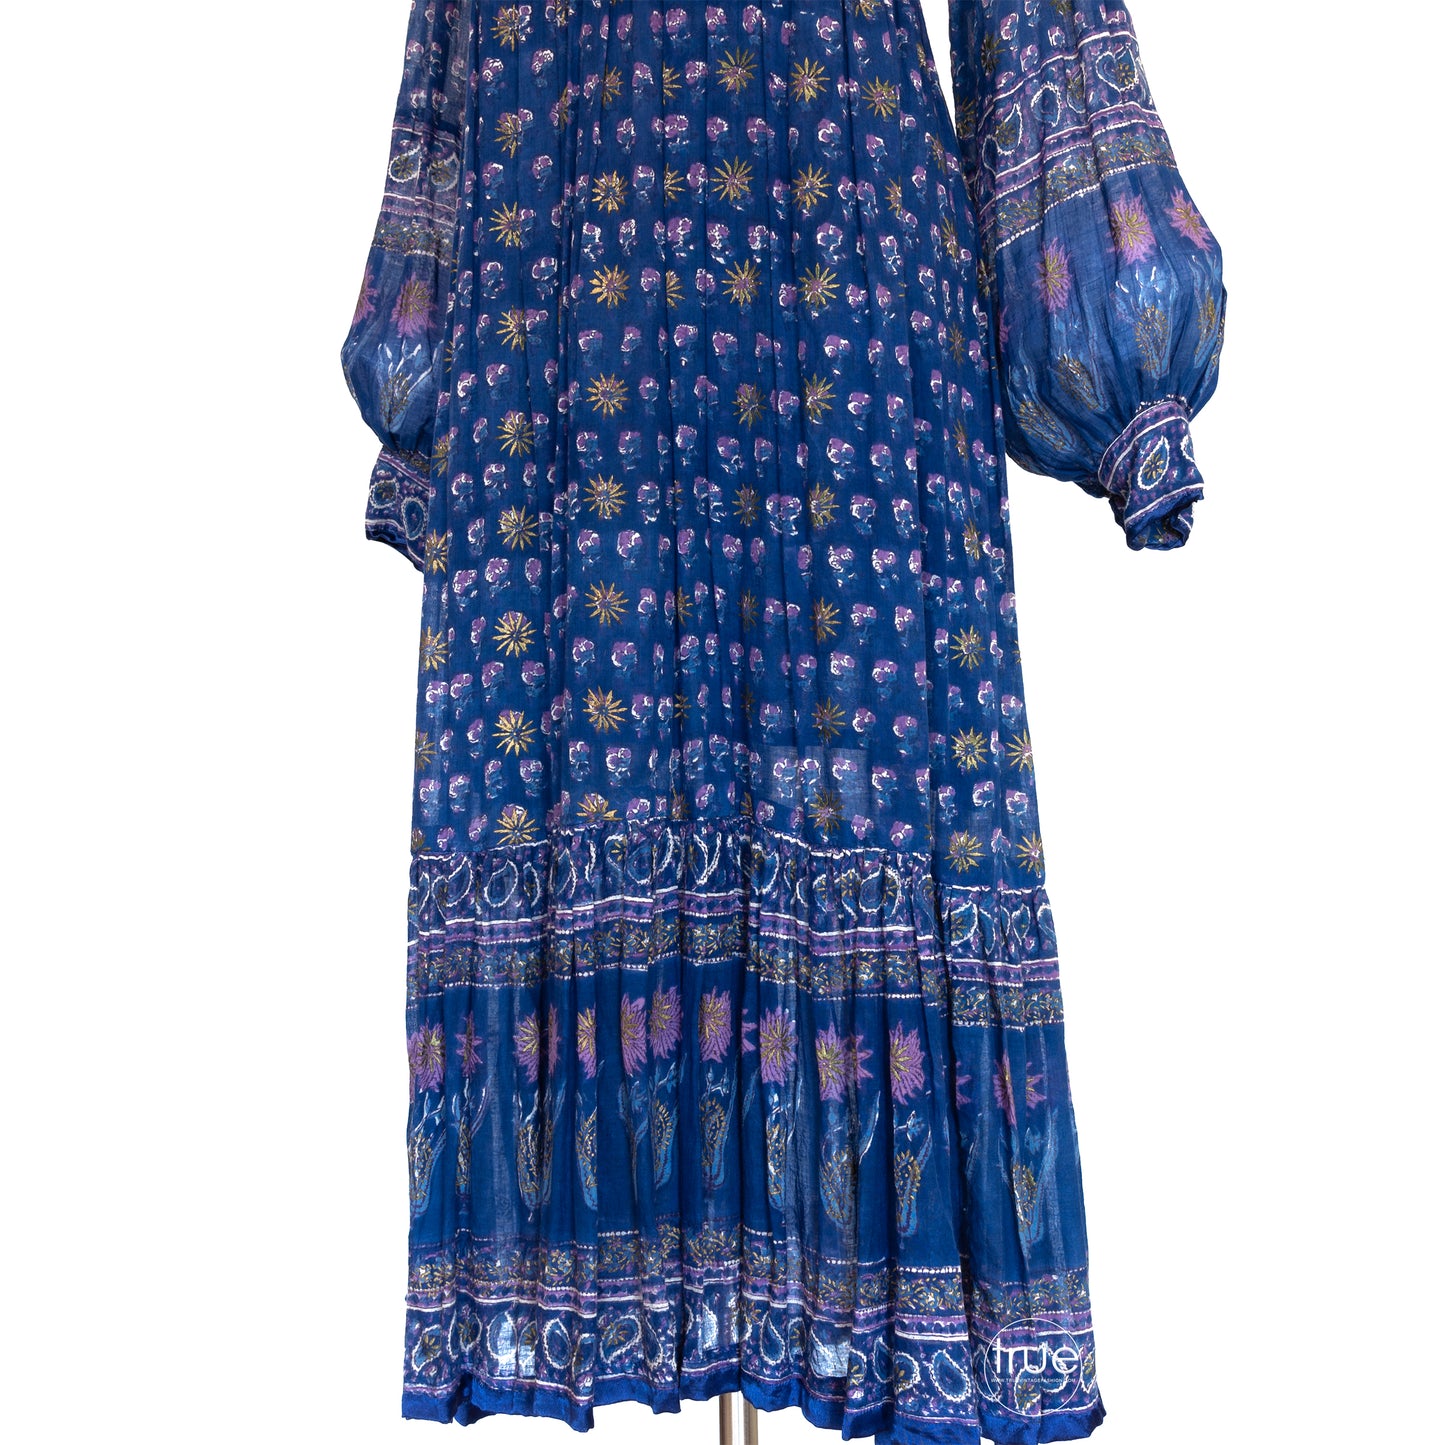 vintage 1970's dress ...exquisite INDIAN COTTON semi-sheer block print w/metallic gold accents dress